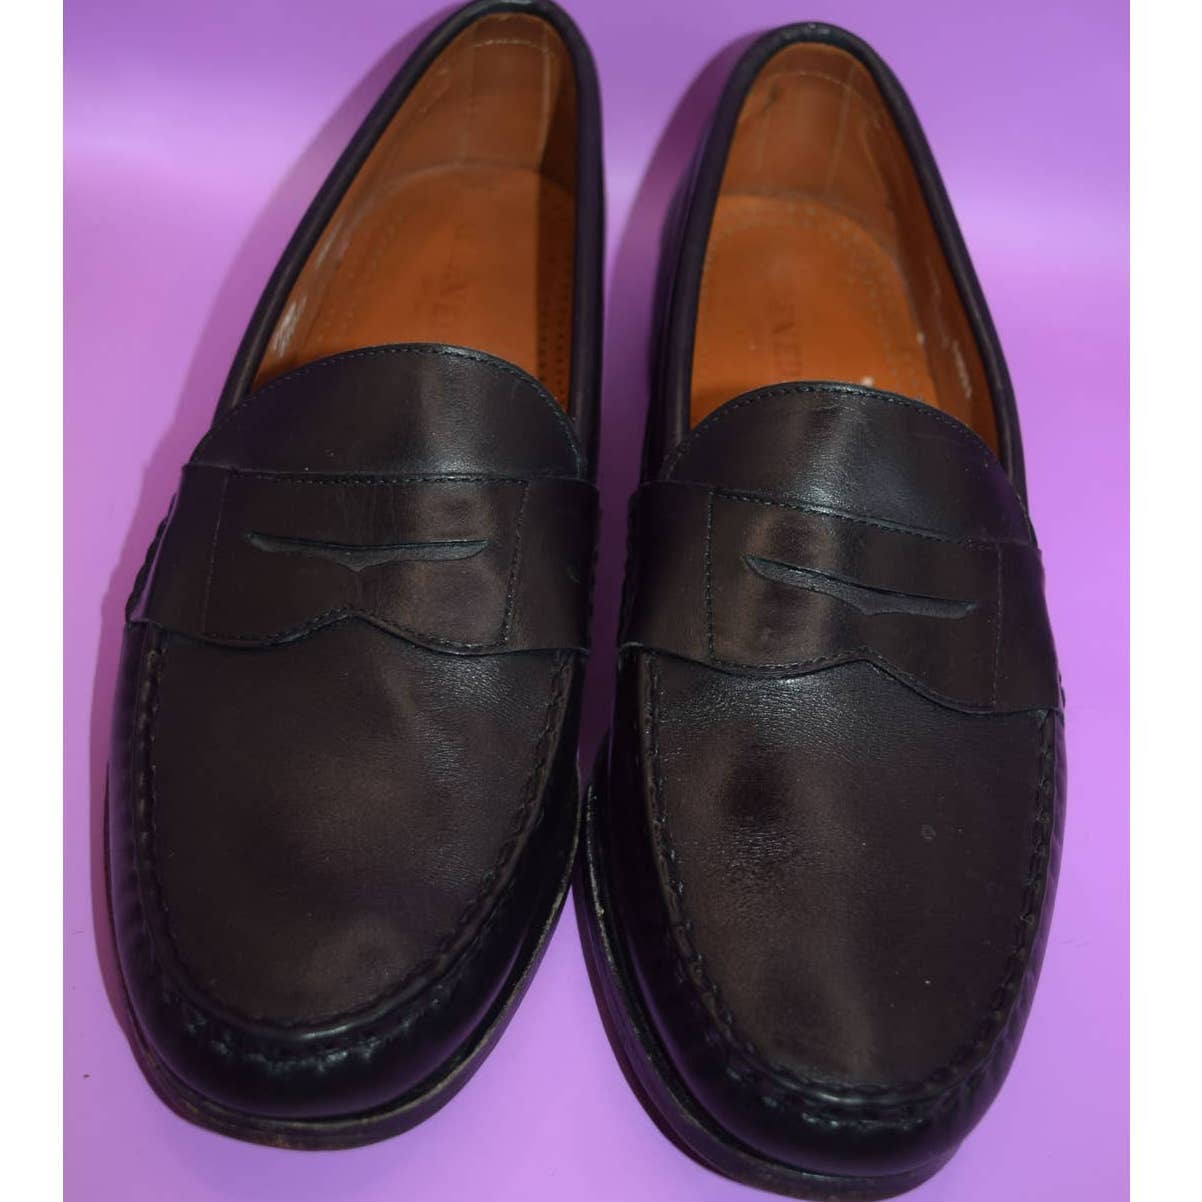 Allen Edmonds Cavanaugh Black Leather Loafers - 11.5 B